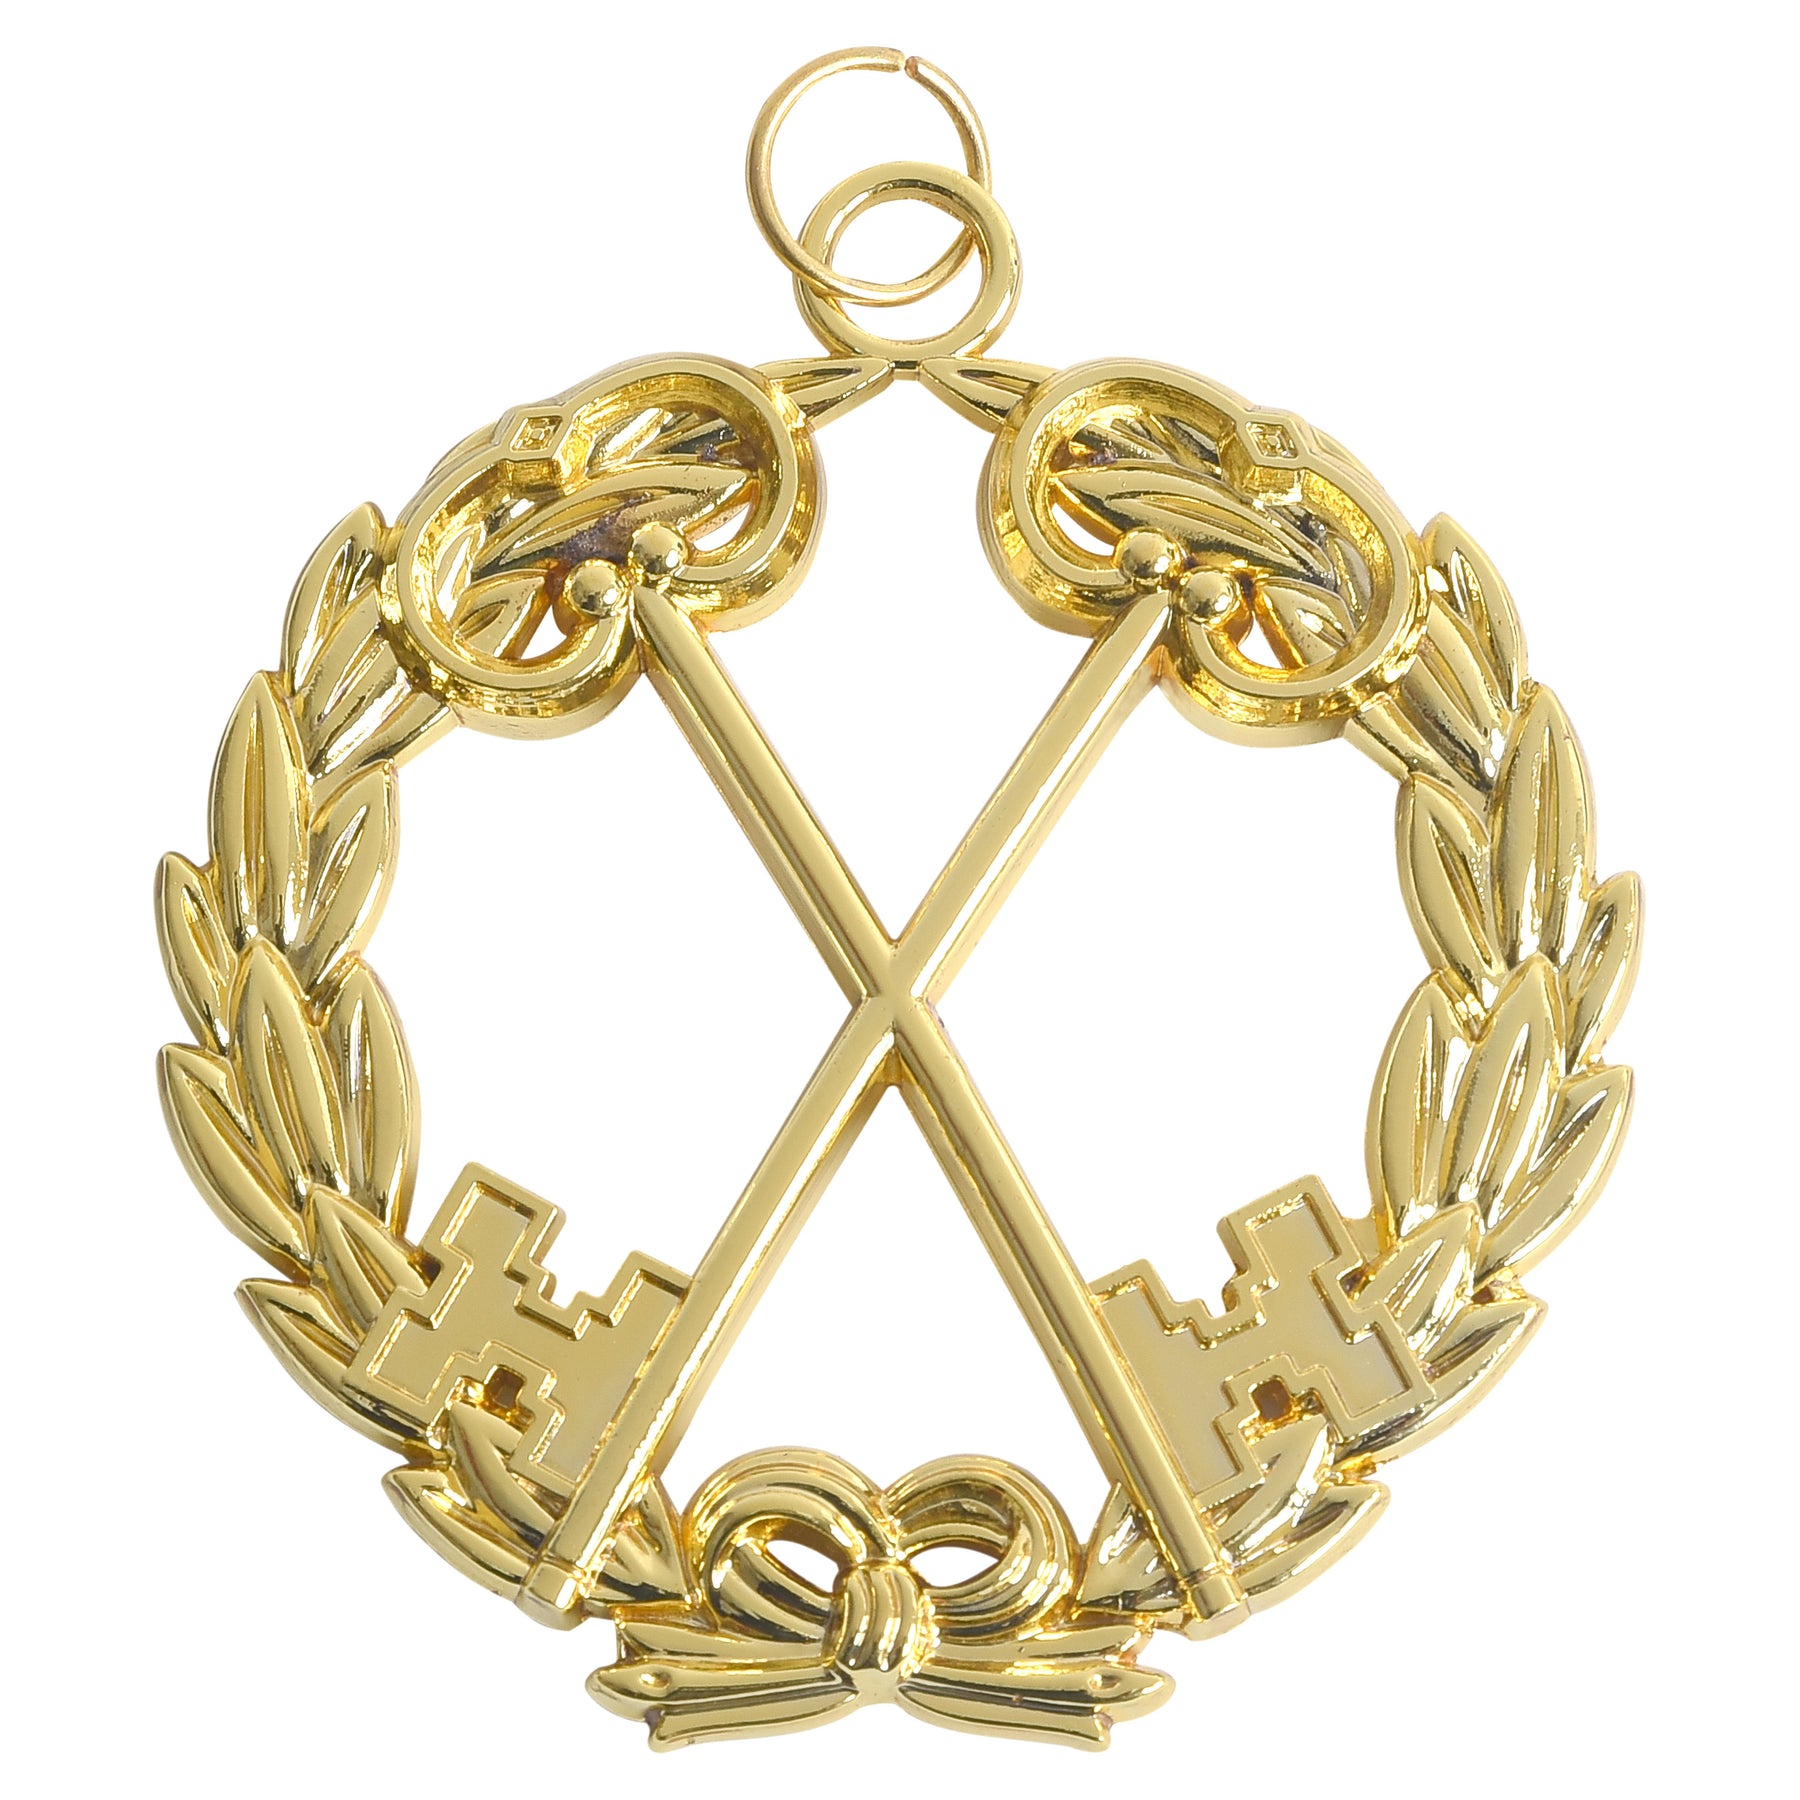 Grand Treasurer Blue Lodge Officer Collar Jewel - Gold Metal - Bricks Masons